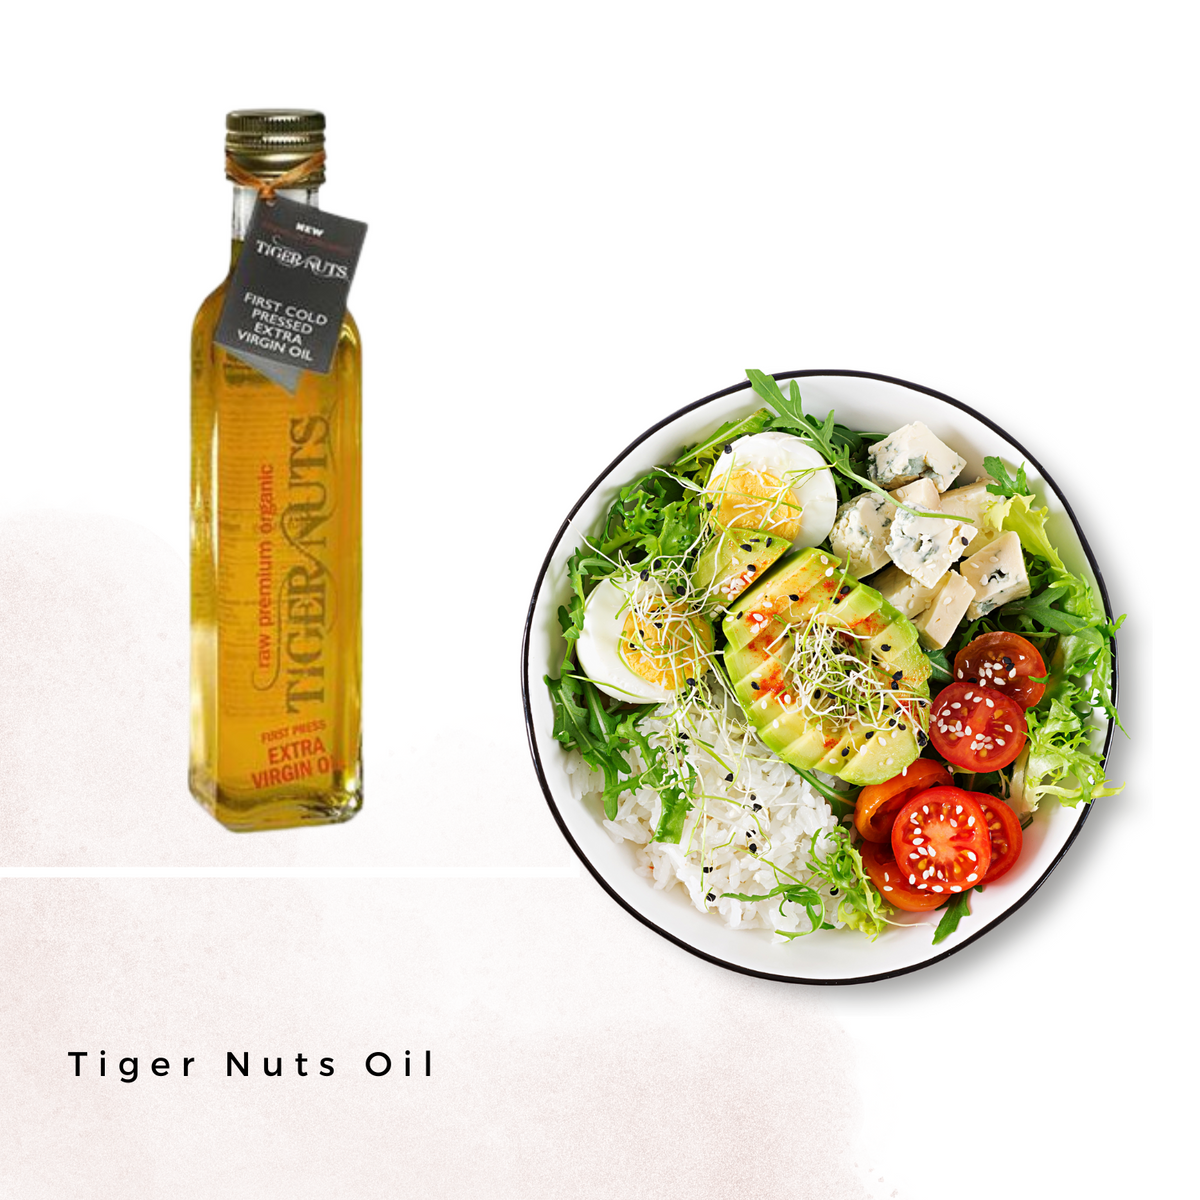 Tiger Nuts Oil, Organic, Cold Press (250 ml bottle) - 12 bottles x 1 case by Farm2Me